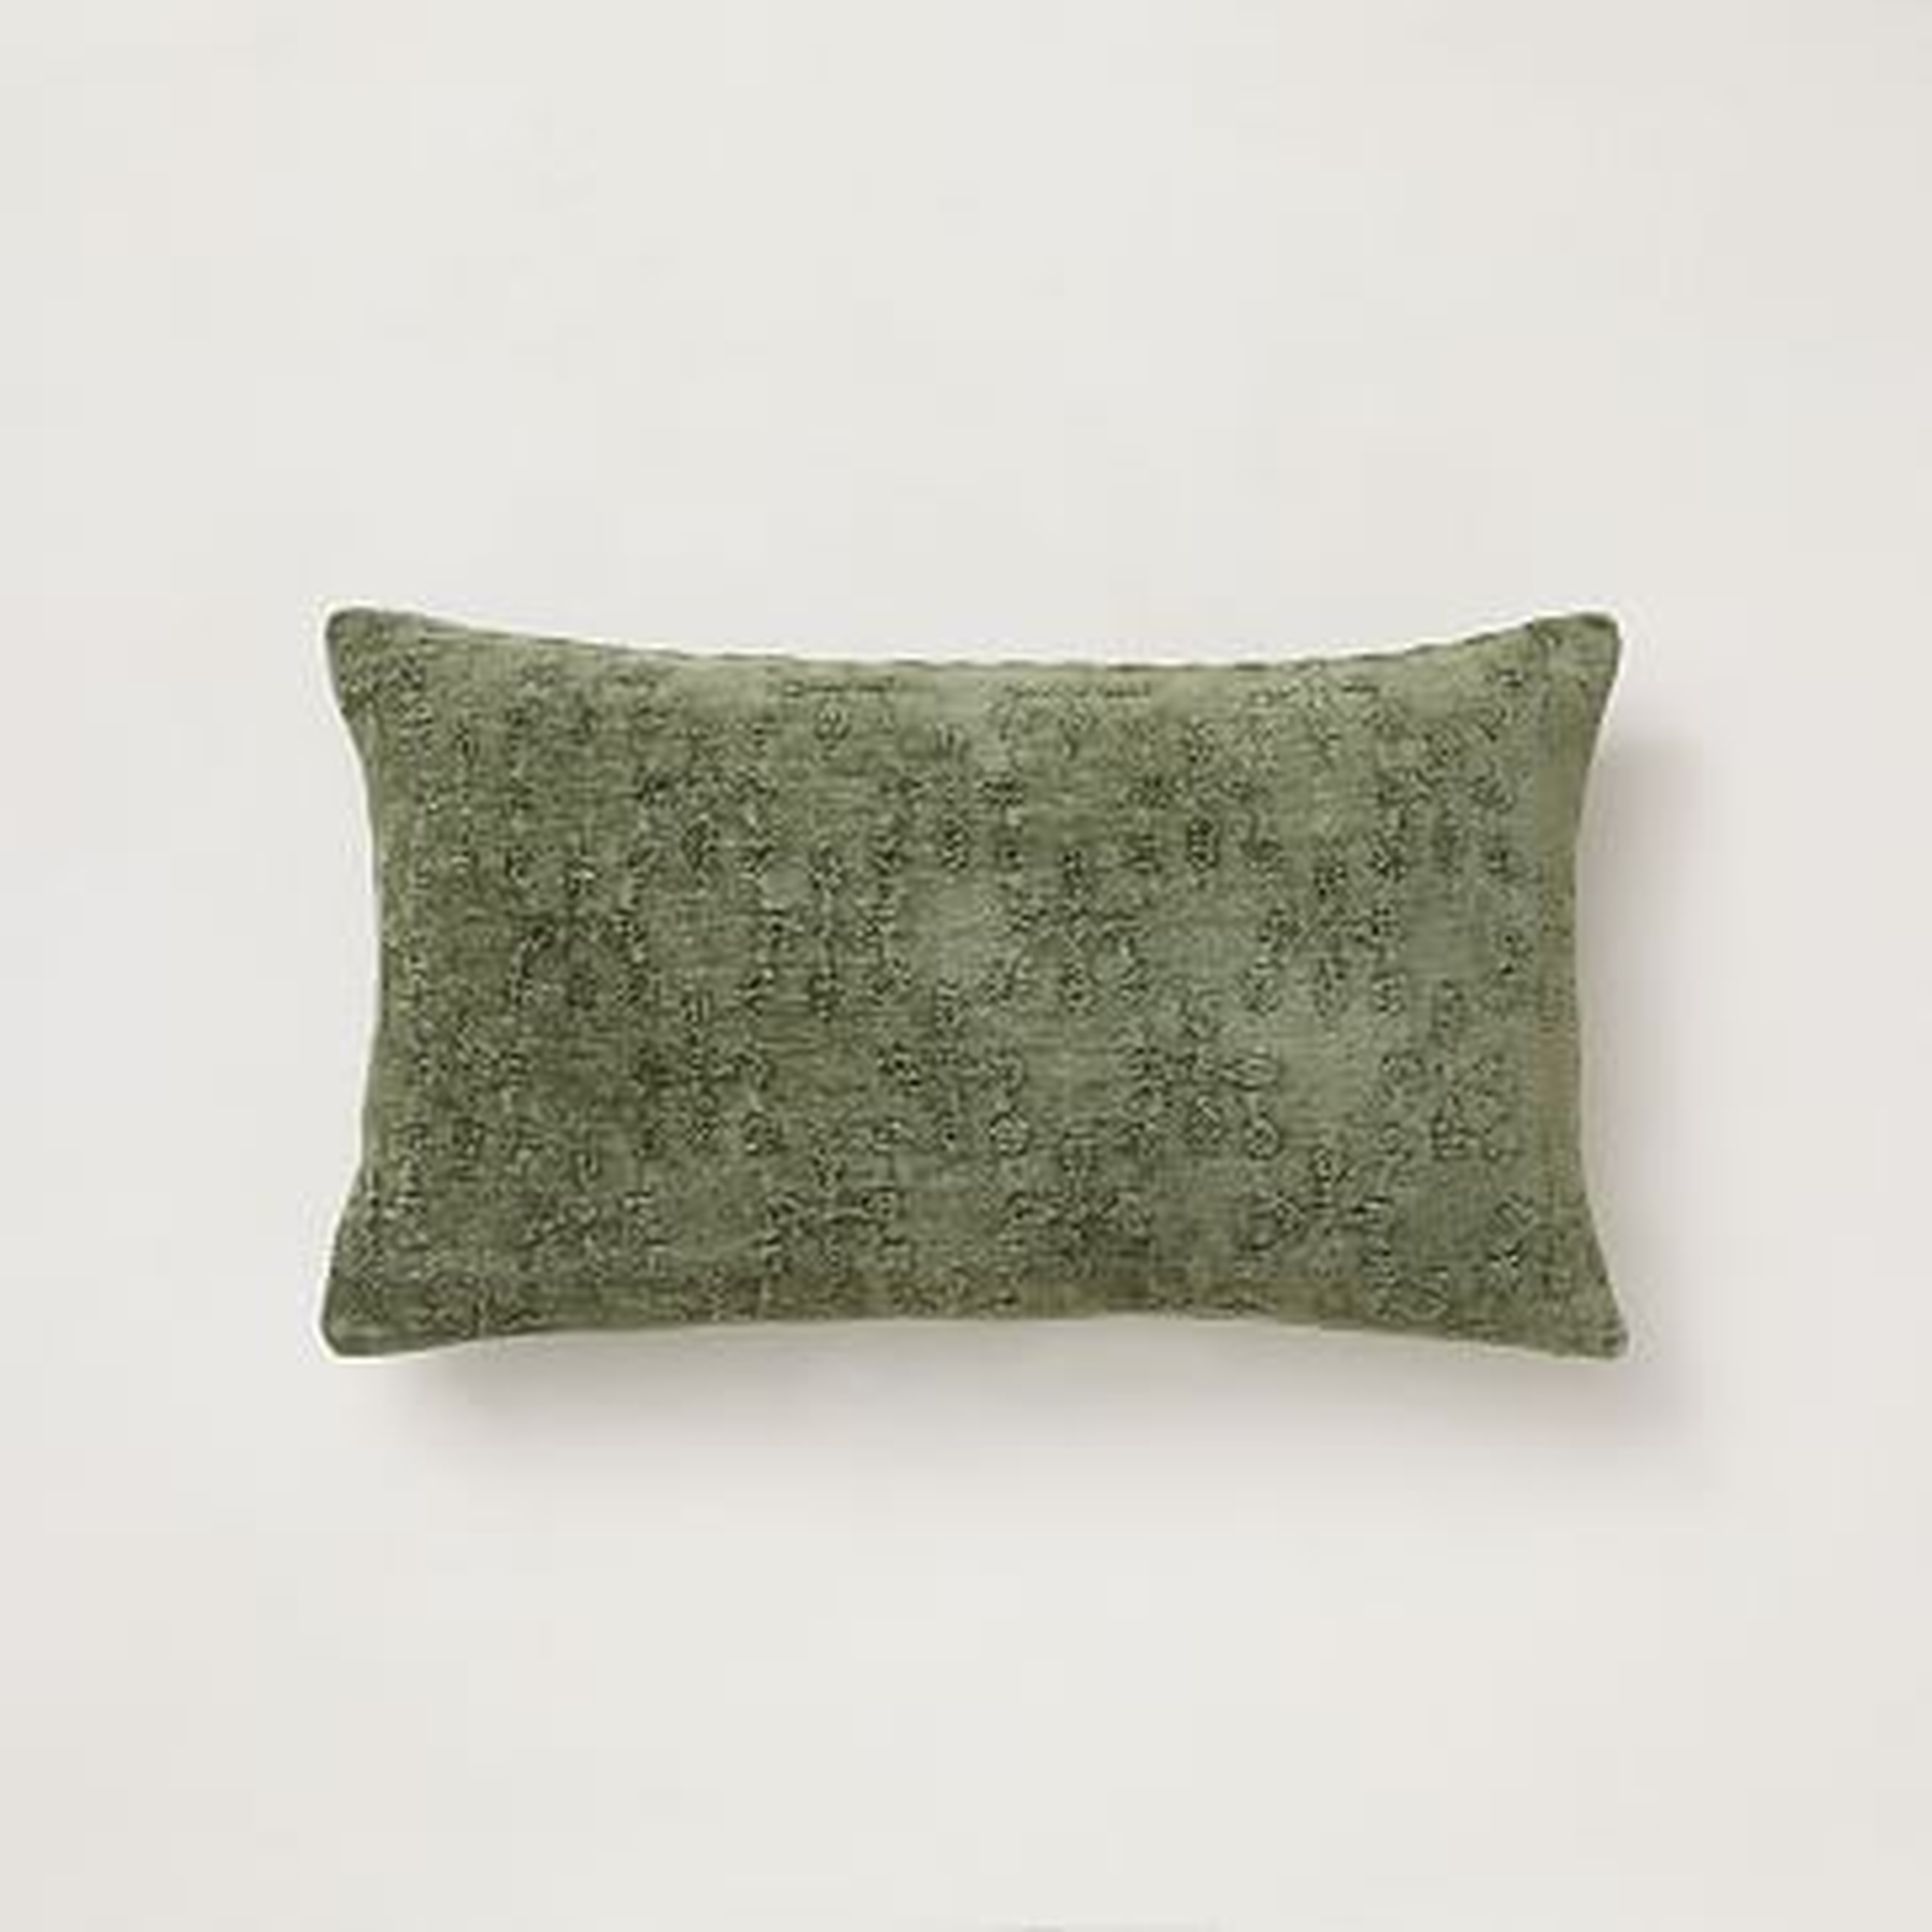 Chenille Jacquard Pillow Cover, Emerald, 12"x21" - West Elm